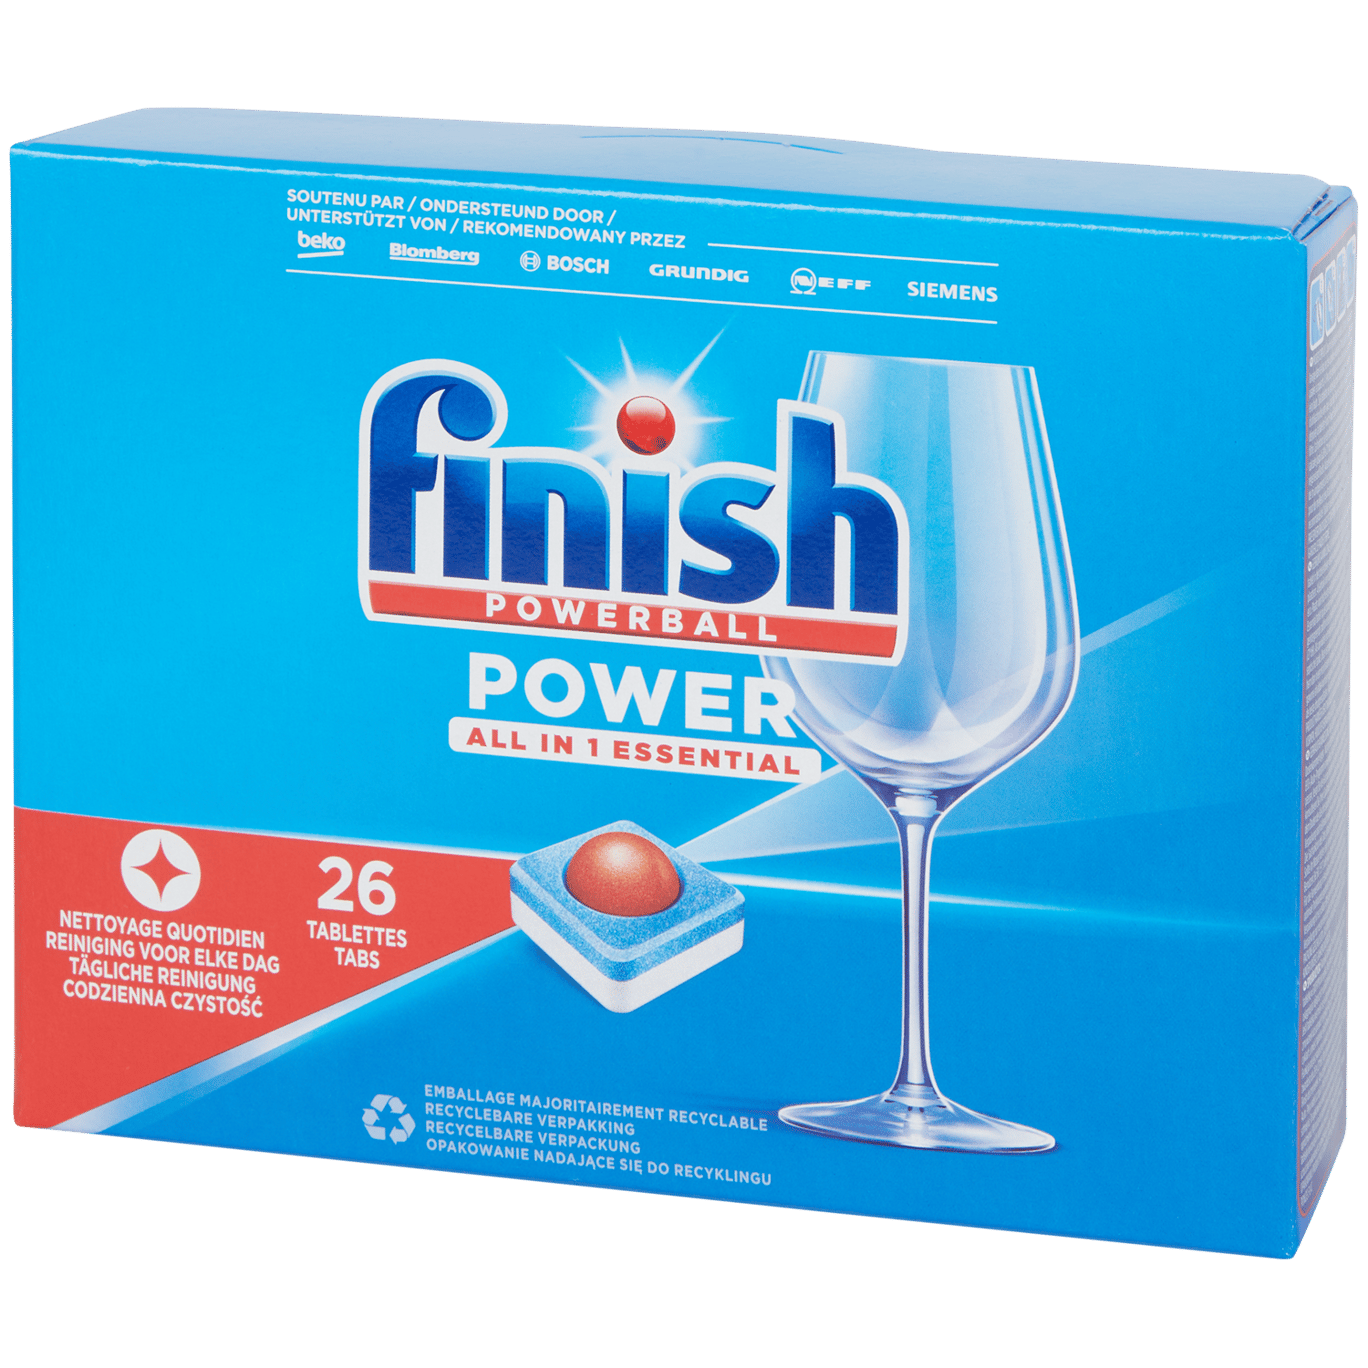 Finish Powerball All-in-1 vaatwastabletten Power